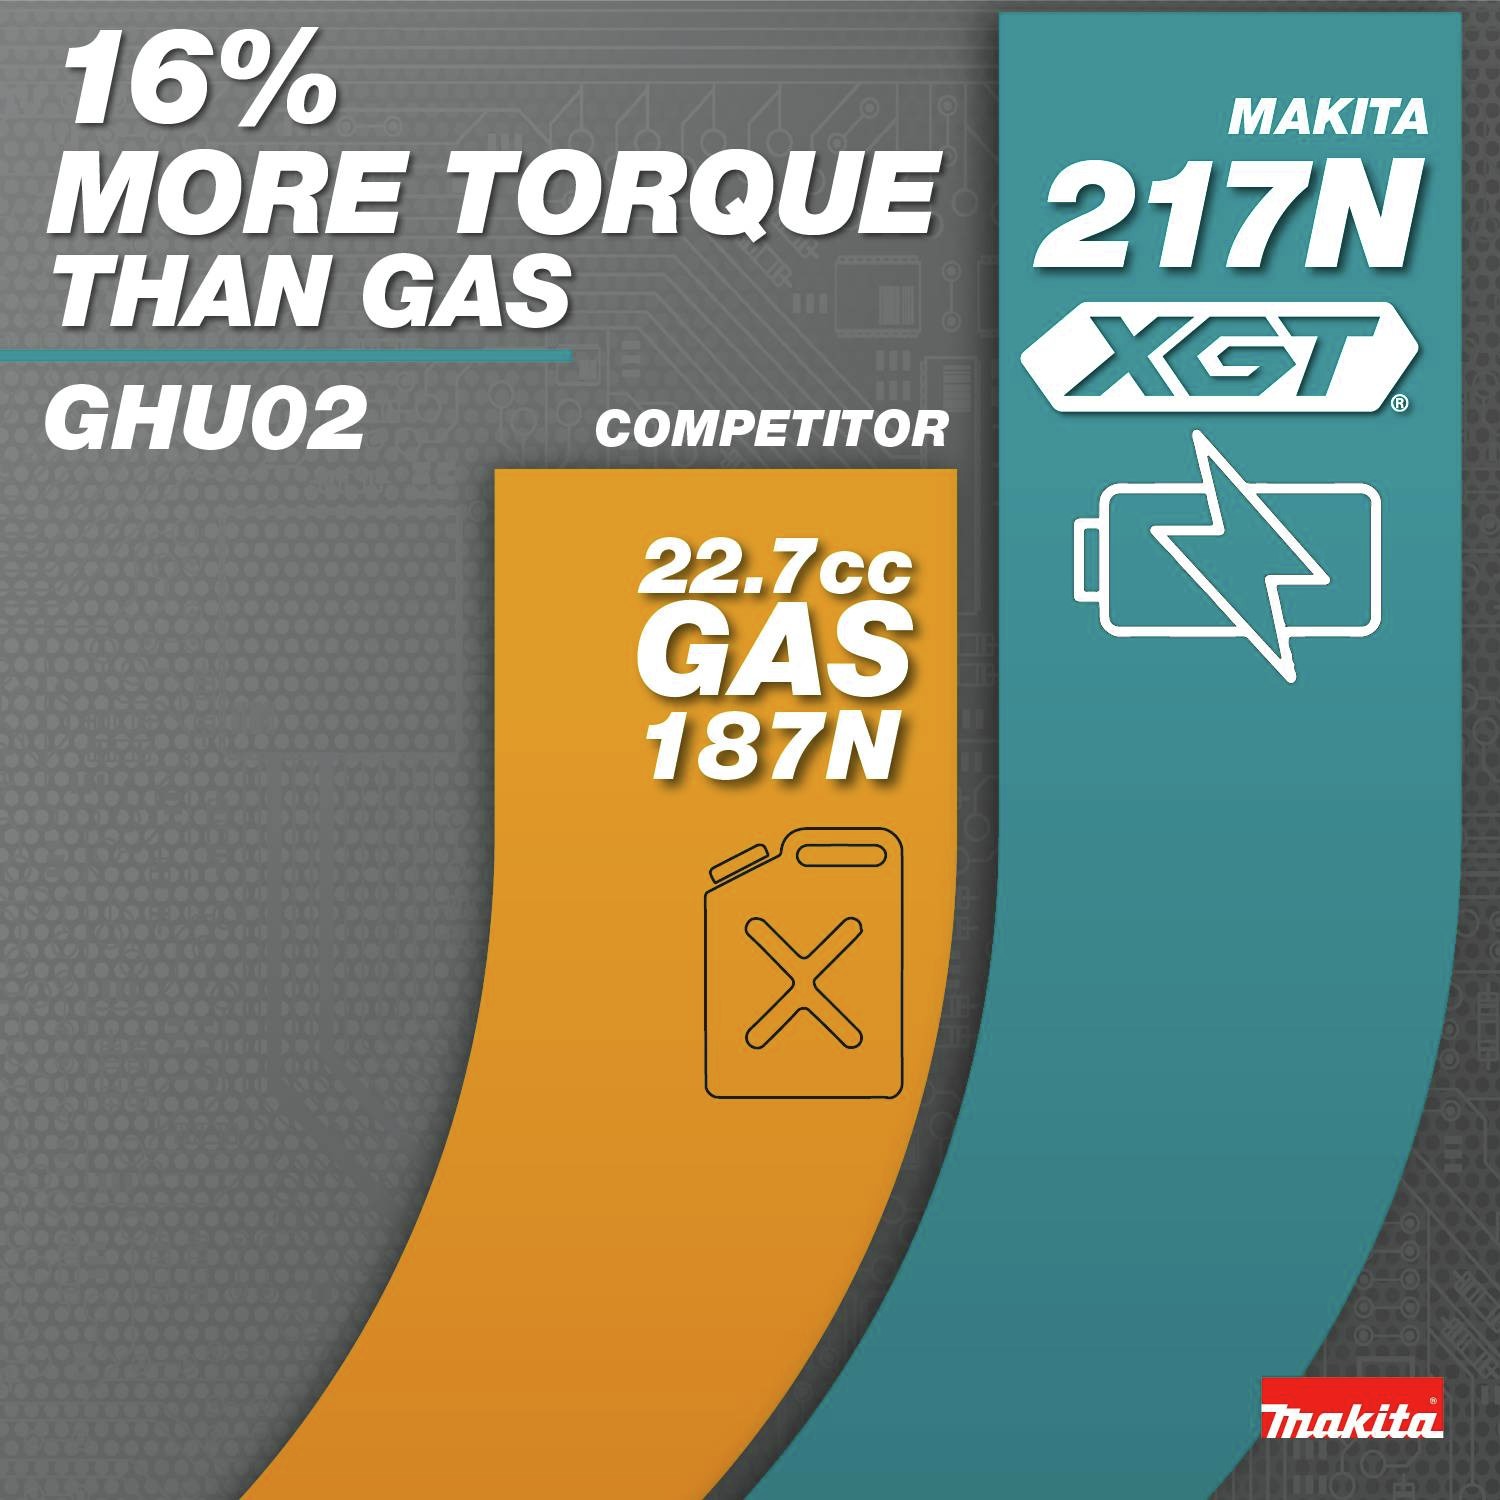 16% More Torque than Gas: Competitor 22.7cc Gas 187N vs Makita 217N